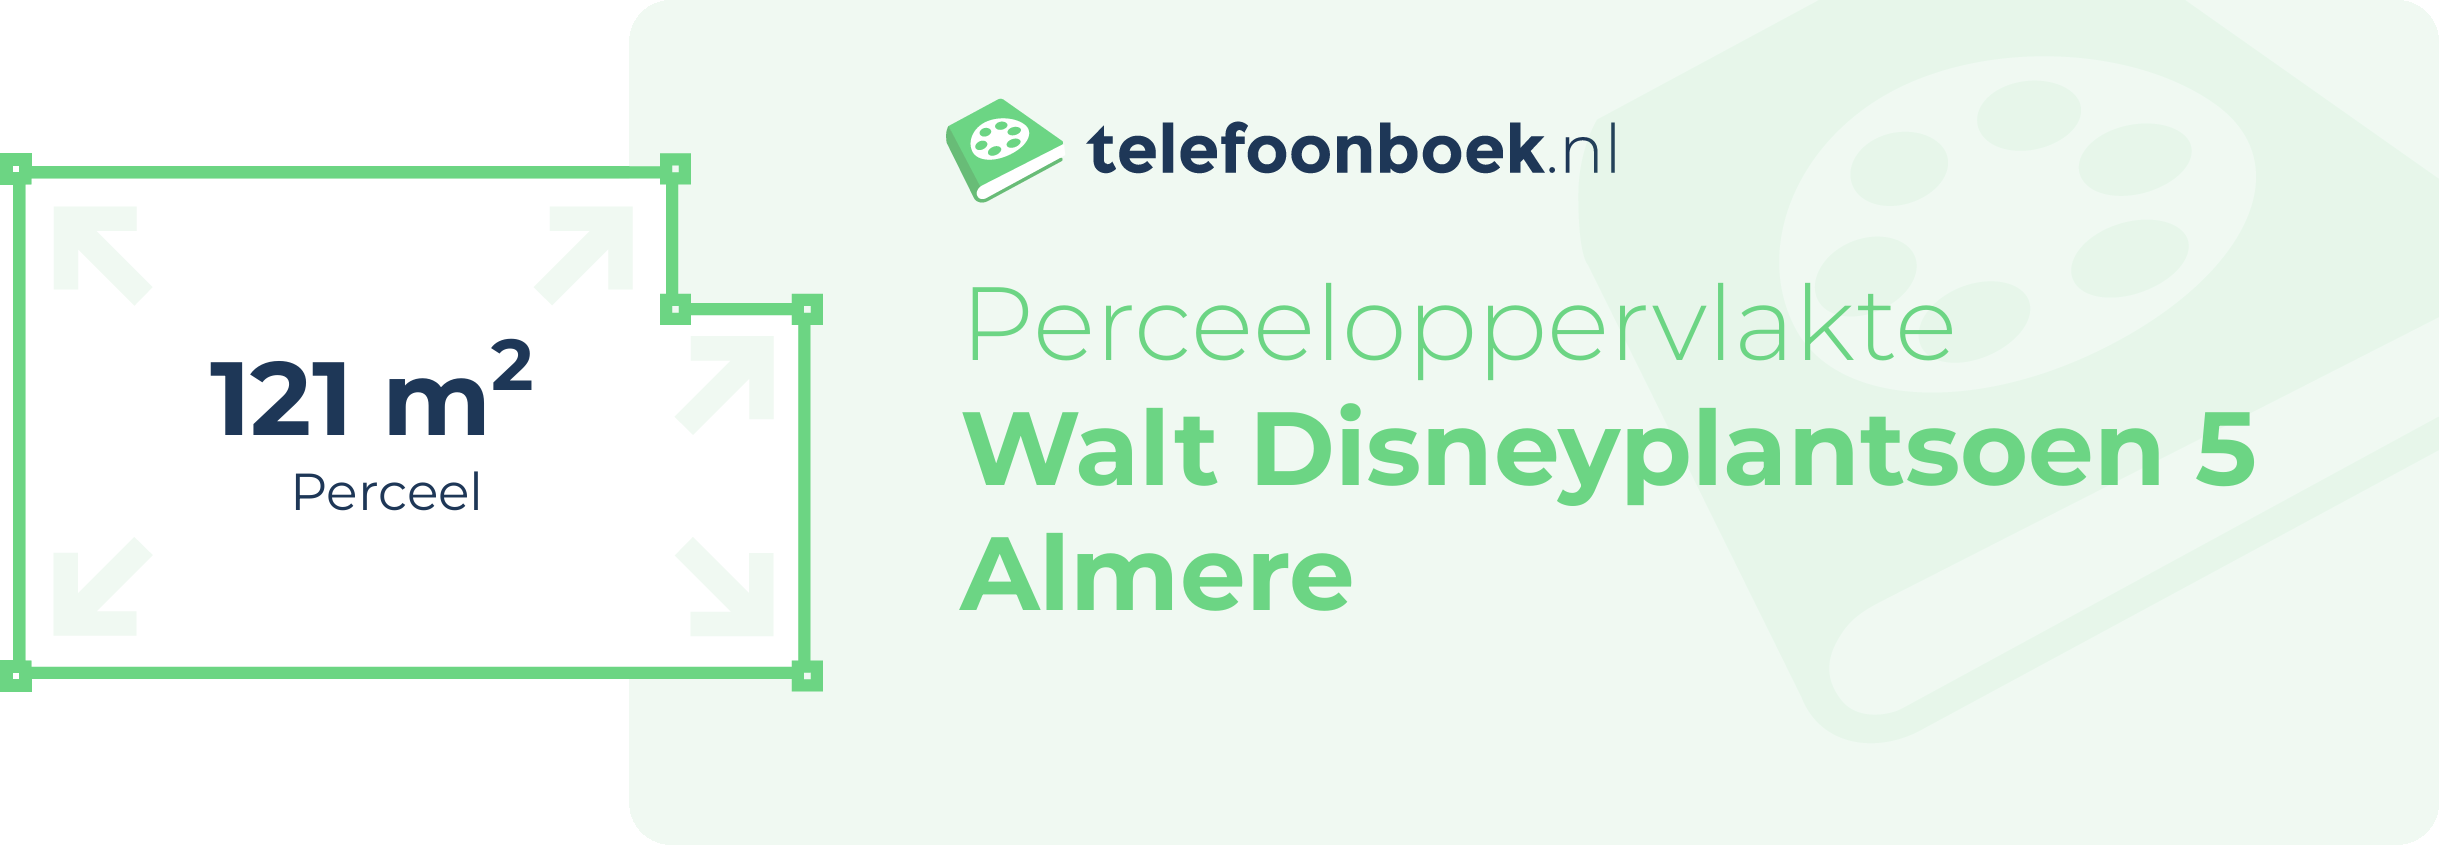 Perceeloppervlakte Walt Disneyplantsoen 5 Almere